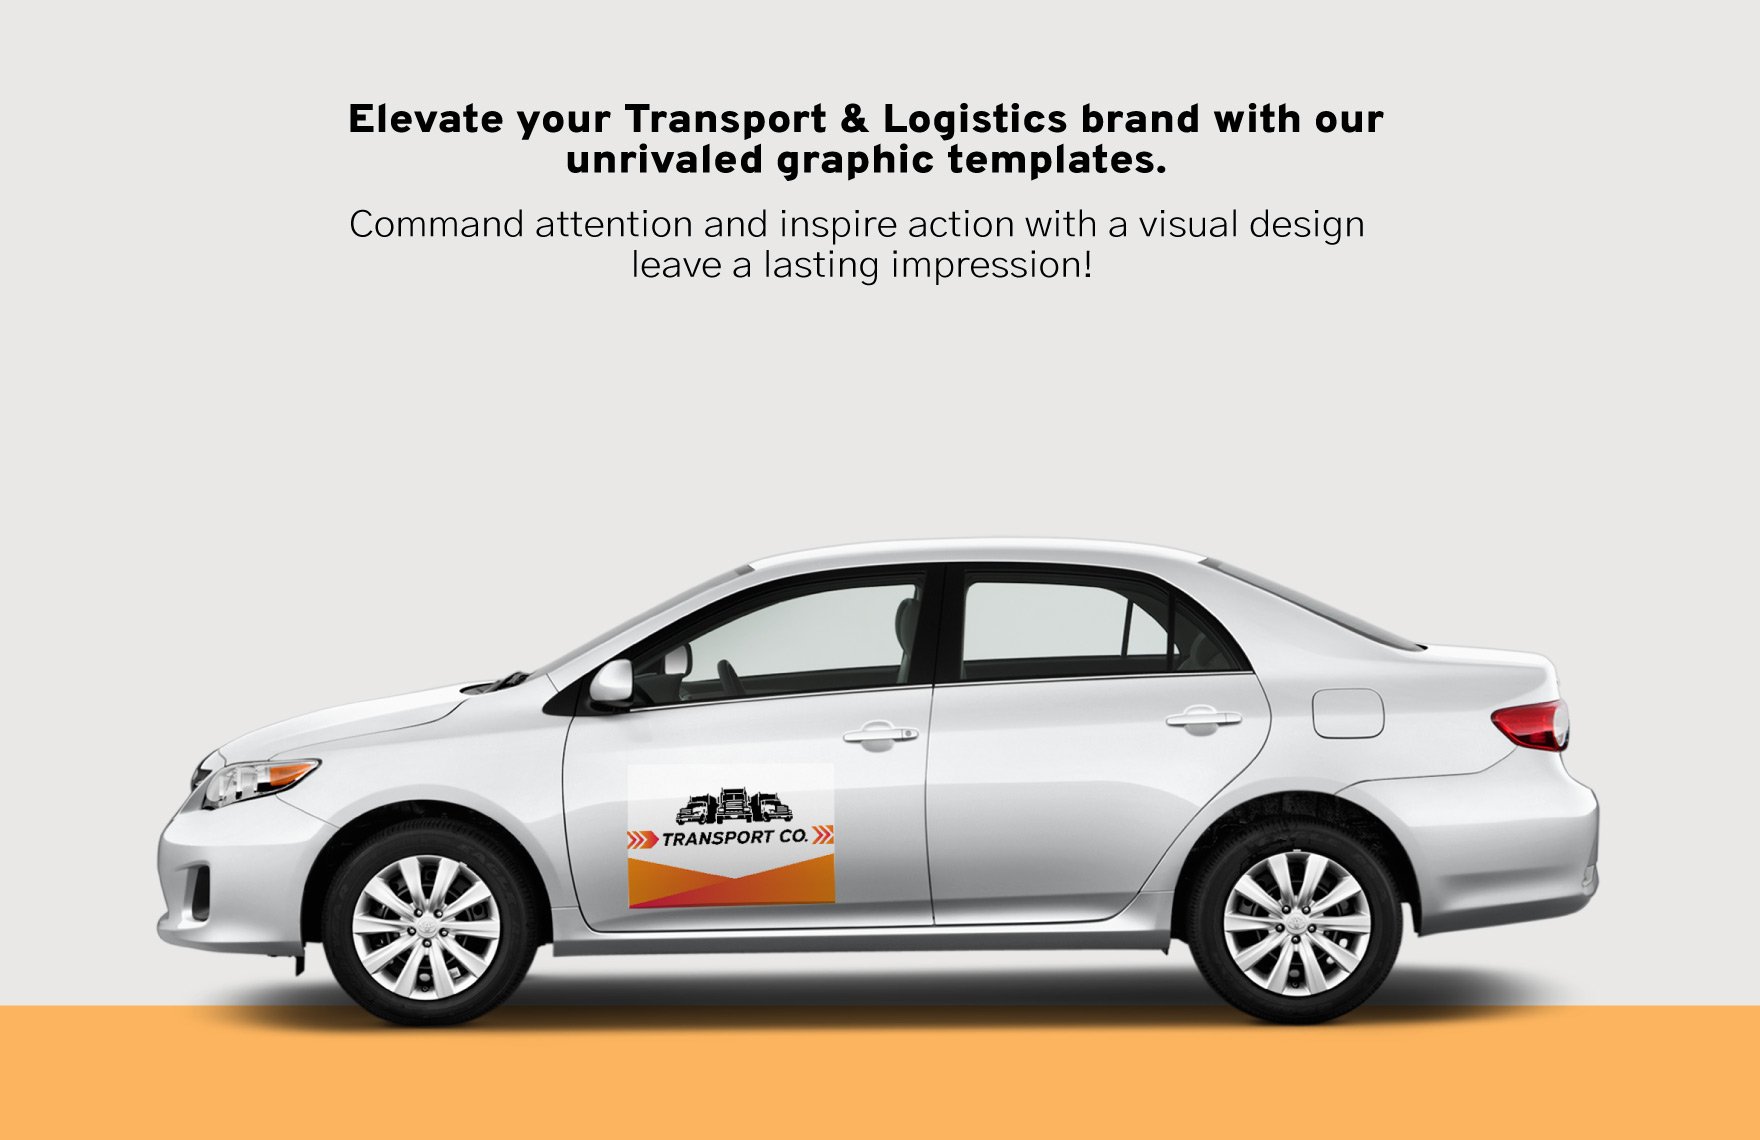 Transport and Logistics Car Magnet Design Template